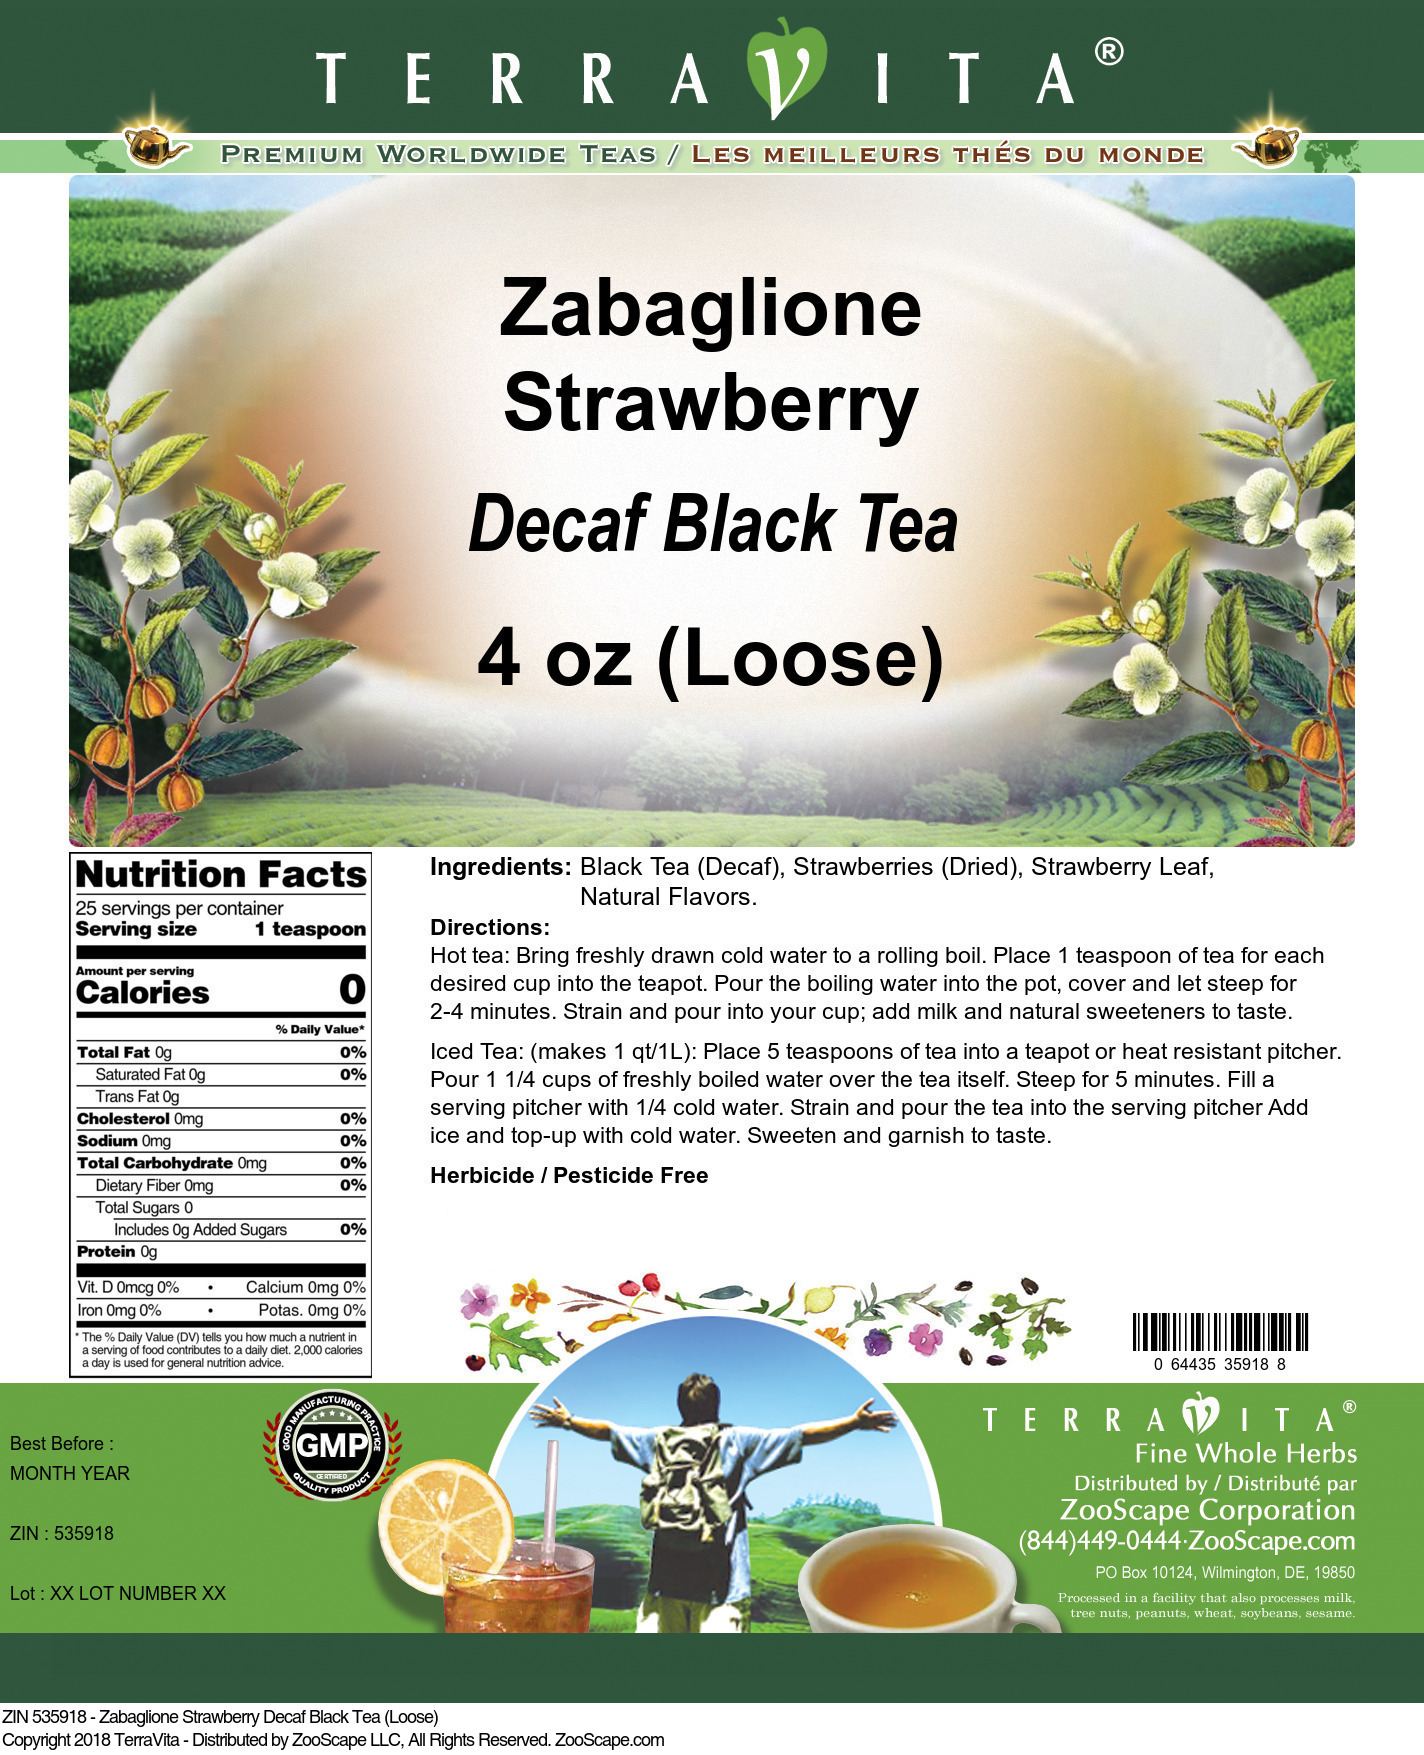 Zabaglione Strawberry Decaf Black Tea (Loose) - Label